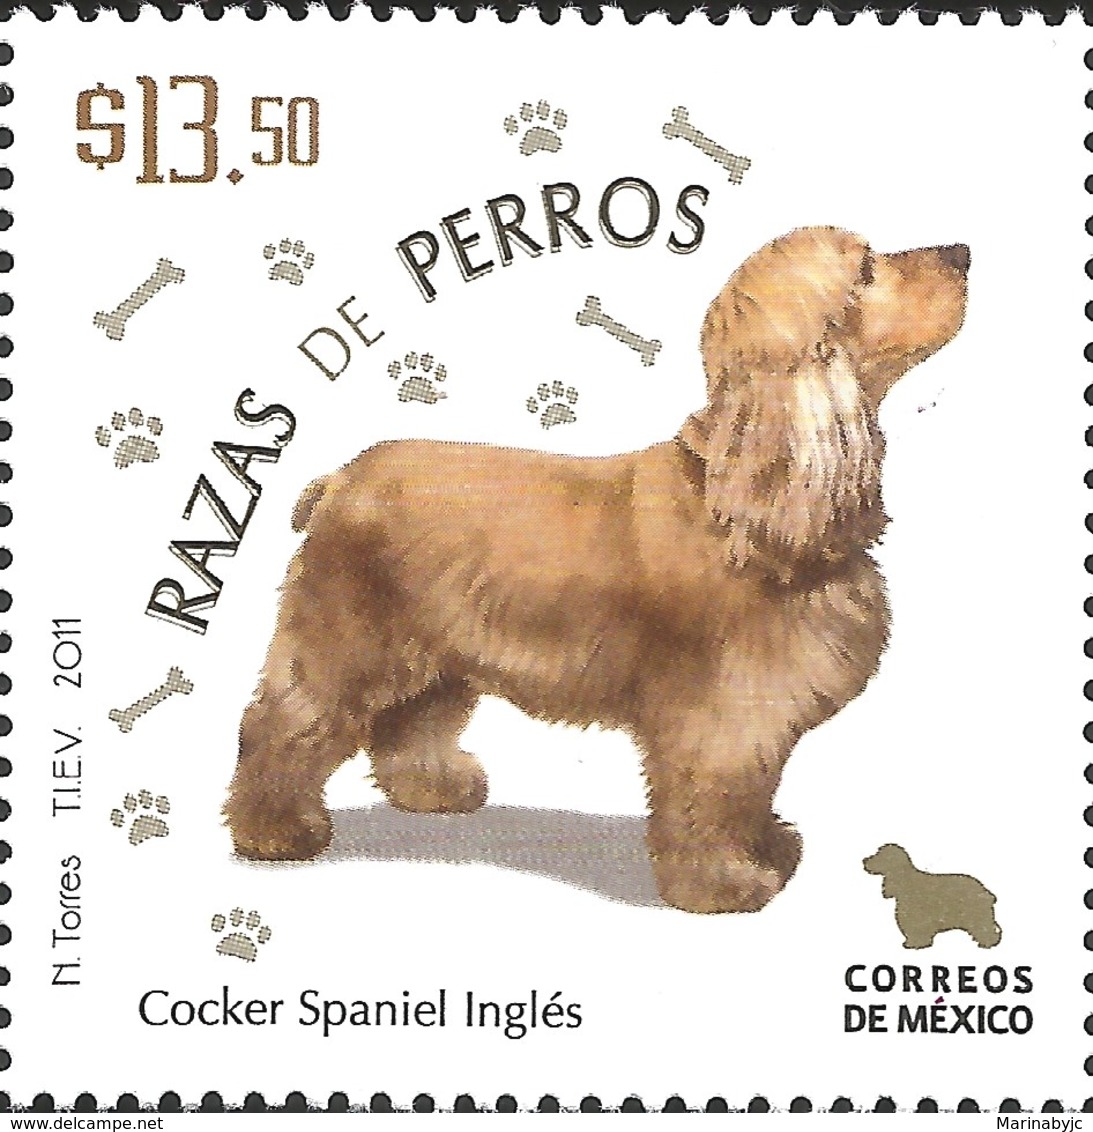 J) 2011 MEXICO, DOG RACE, COCKER SPANIEL INGLES, MNH - Mexico